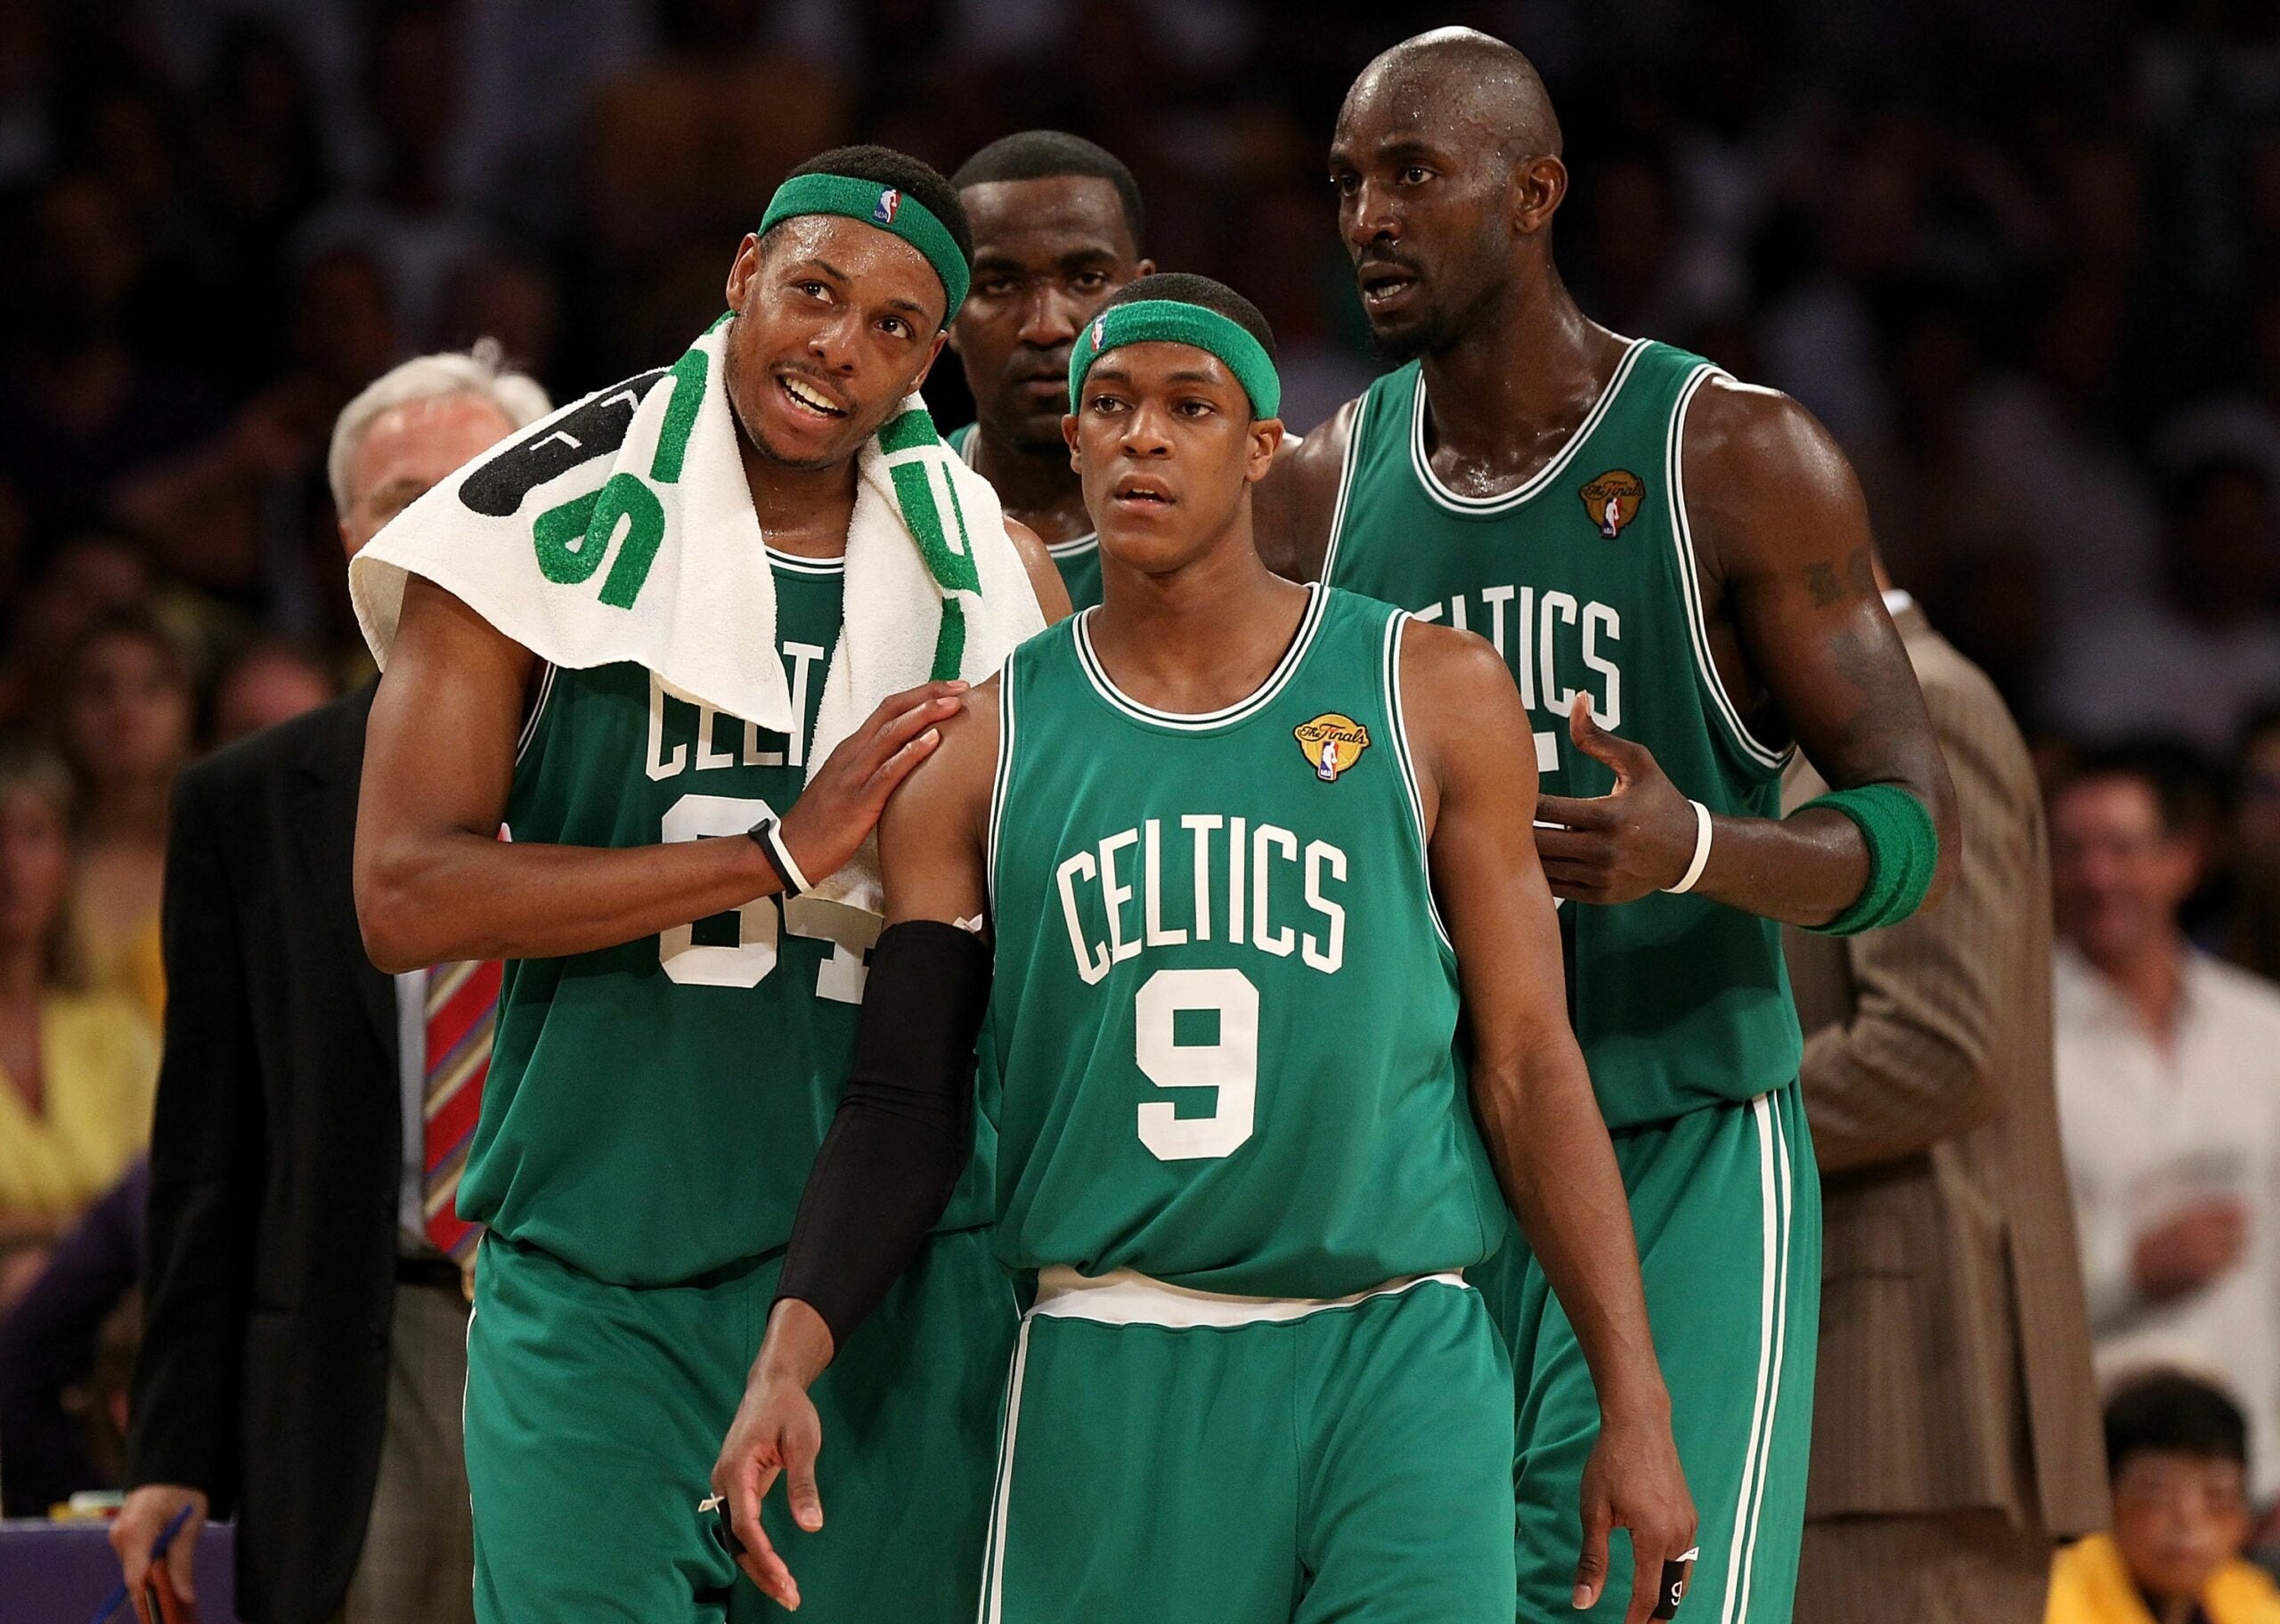 Boston Celtics forward center Kendrick Perkins (43) makes a move